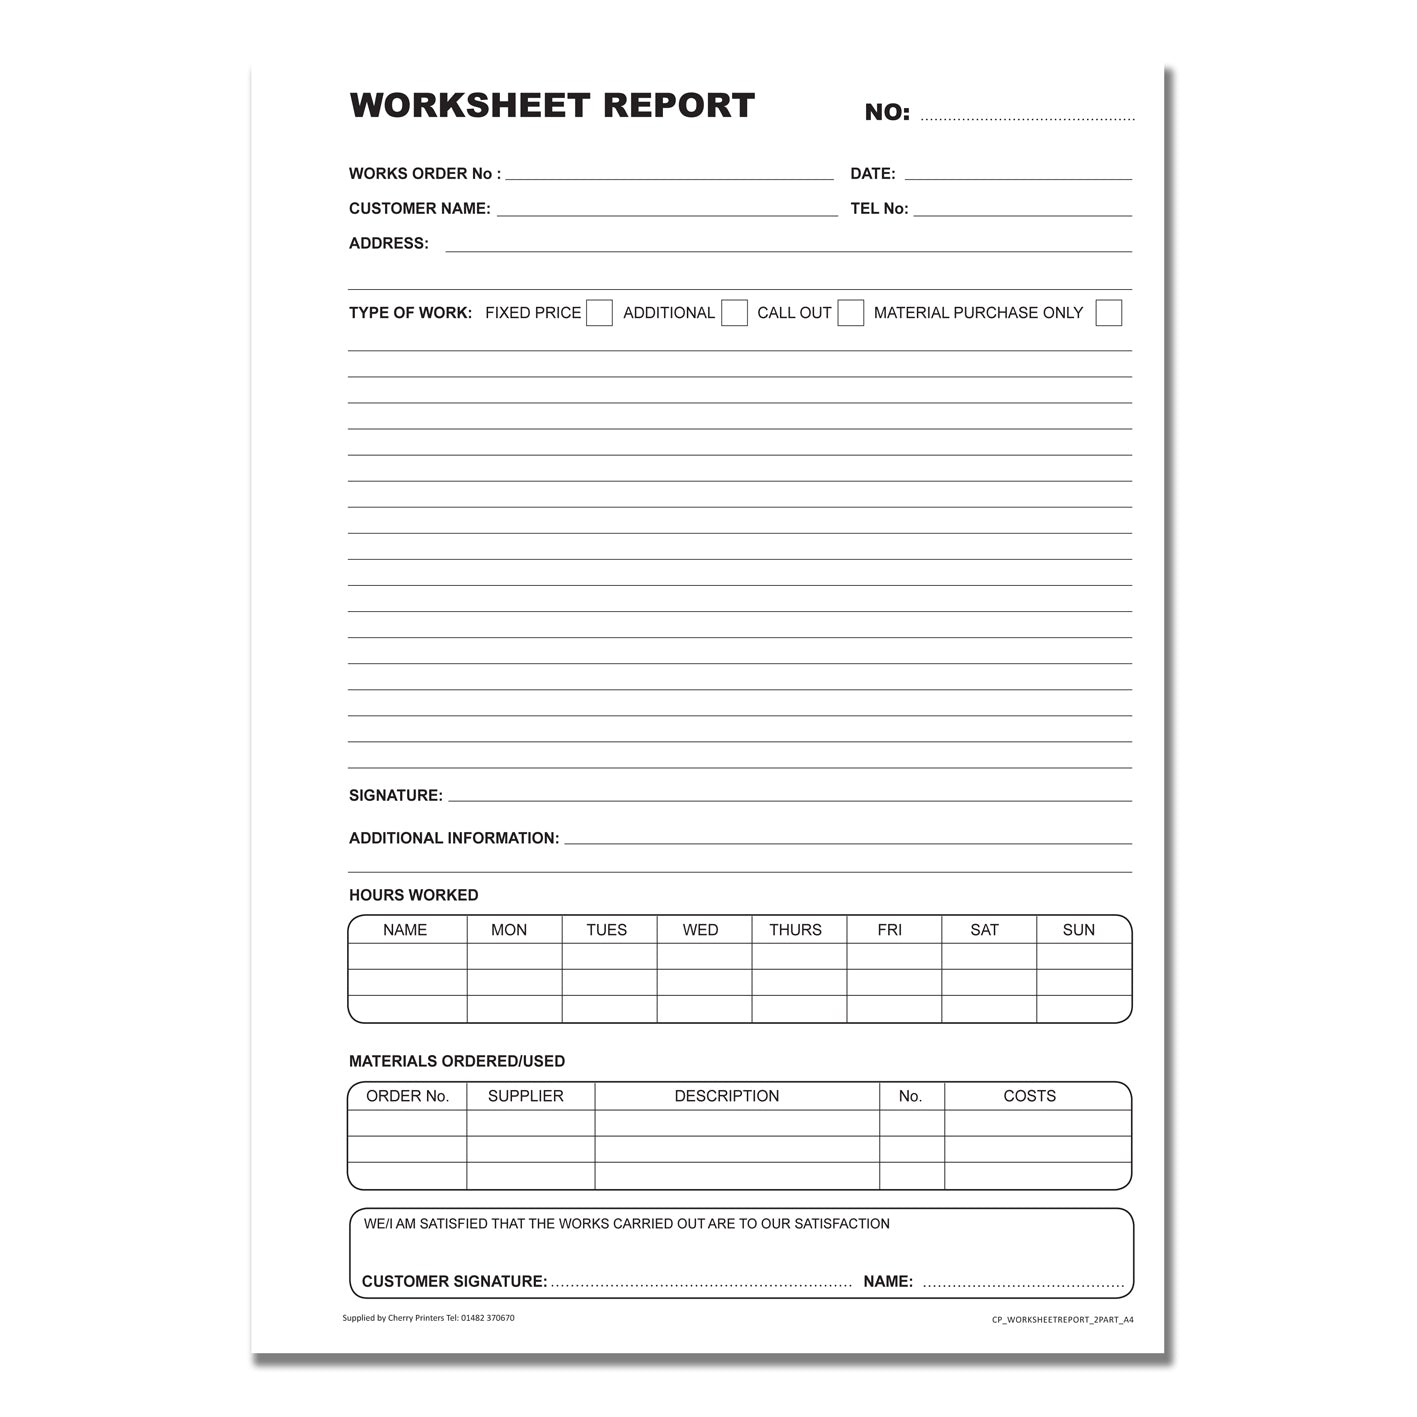 NCR Worksheet Report Book A4 Duplicate